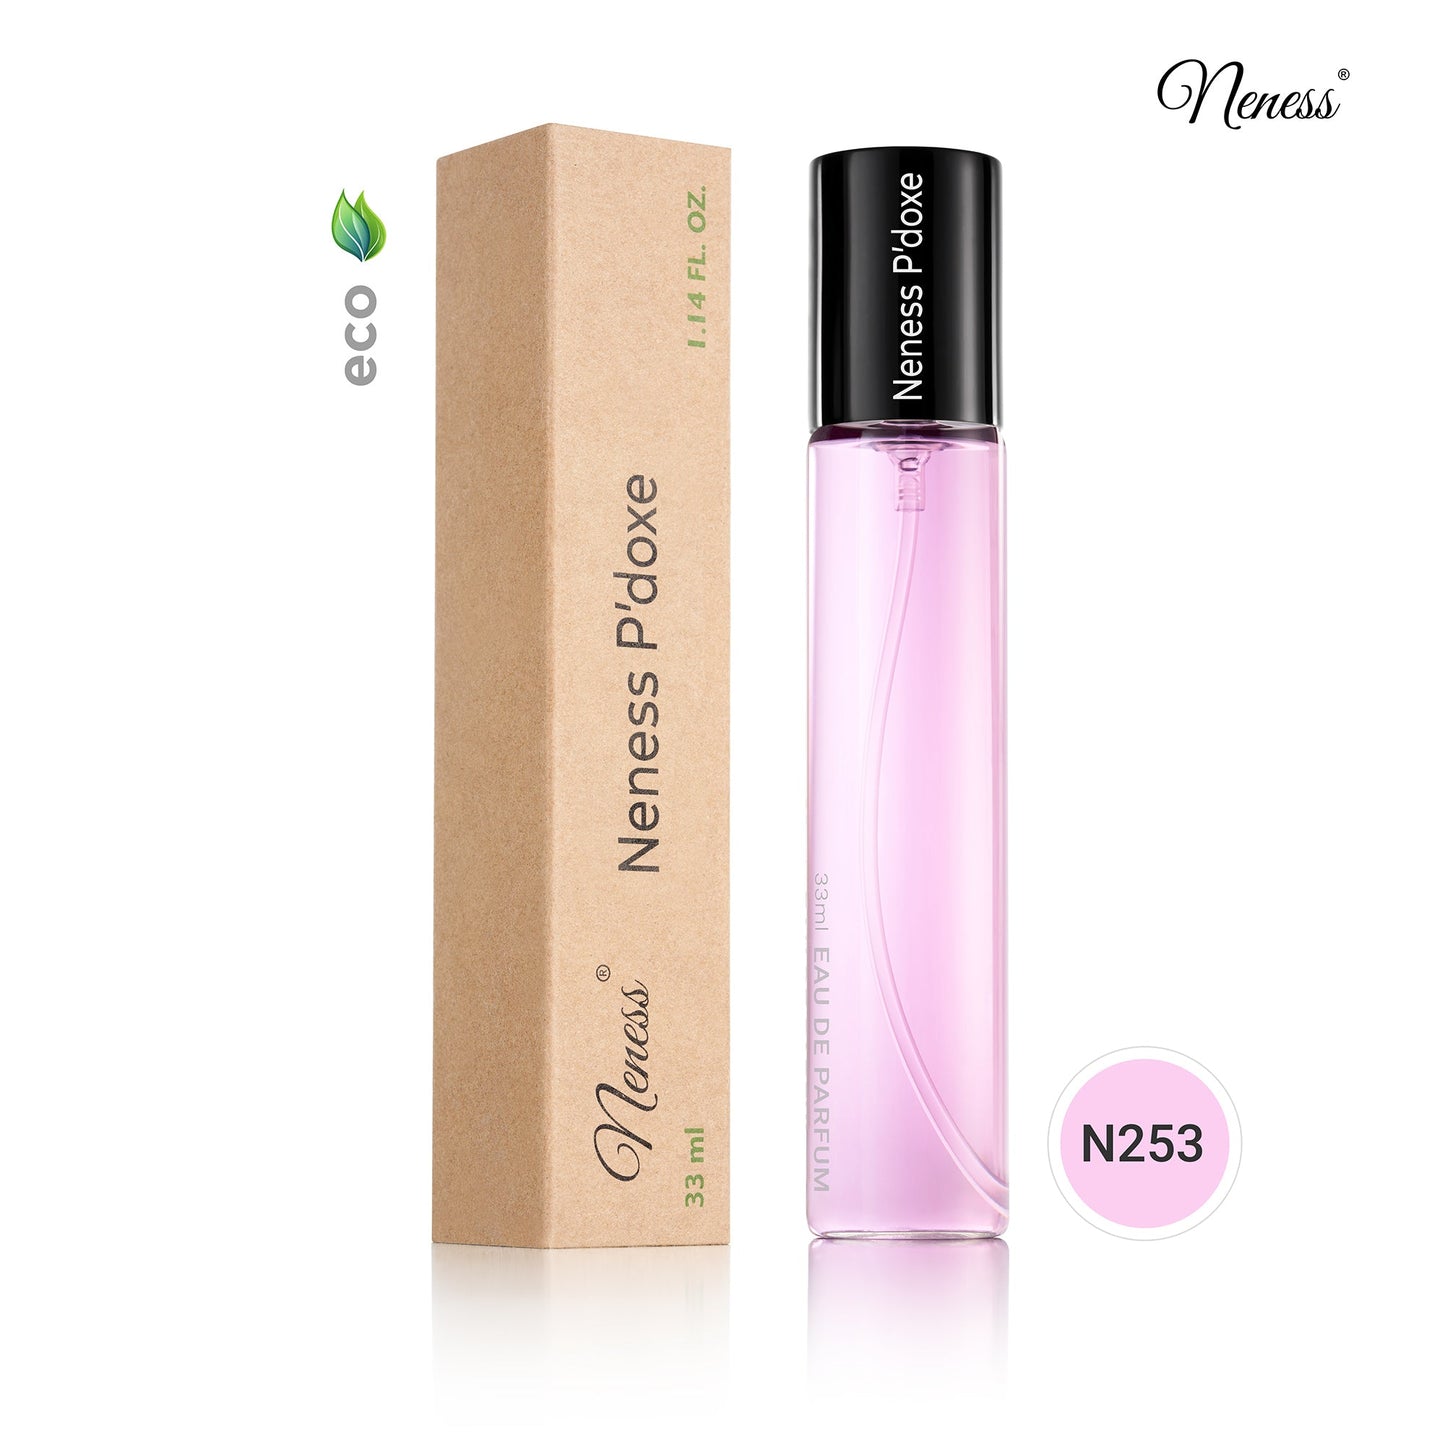 N253. Neness P'Doxe - 33 ml - Perfume For Women